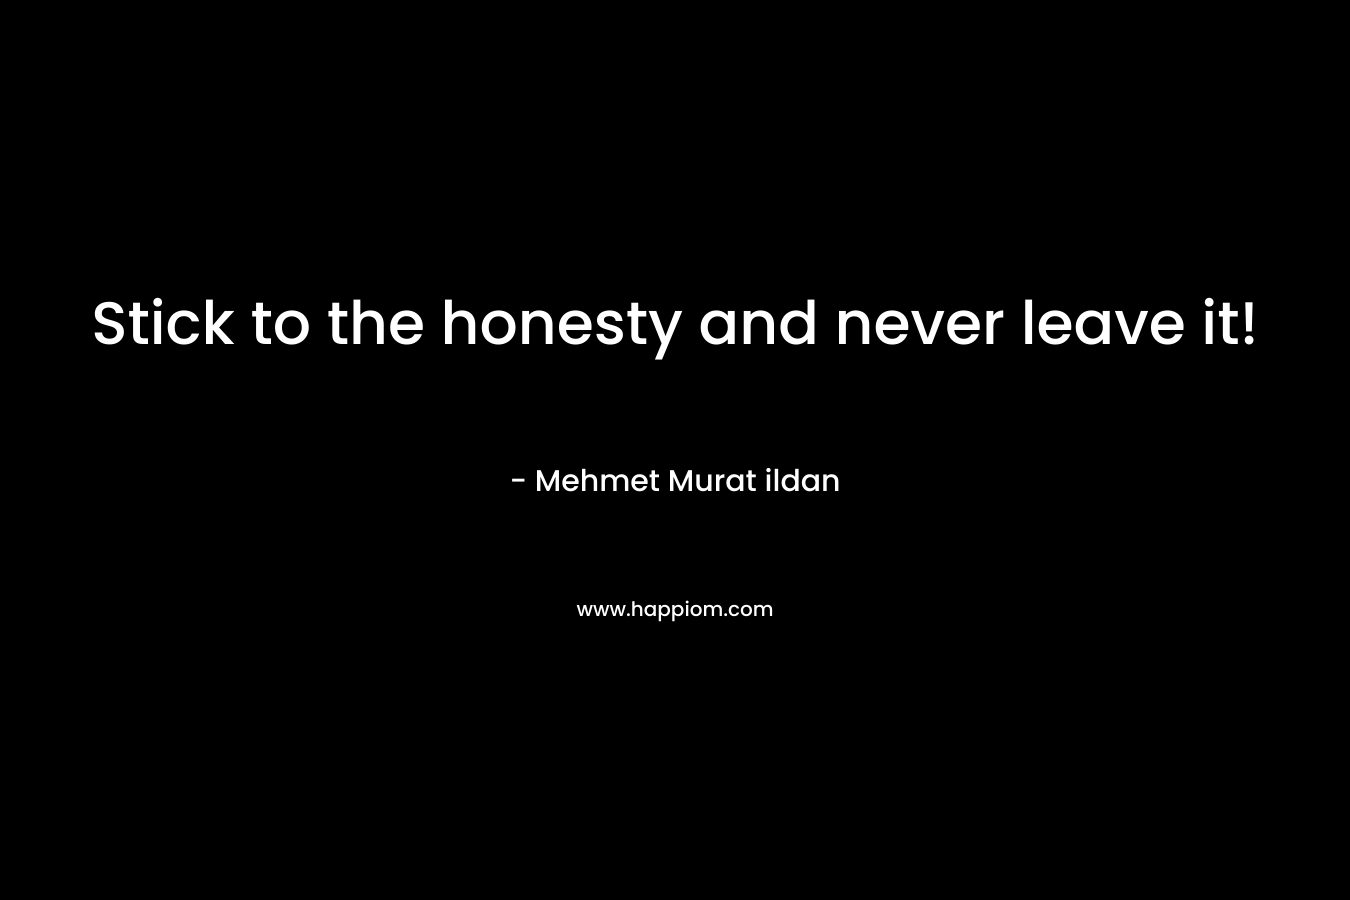 Stick to the honesty and never leave it! – Mehmet Murat ildan